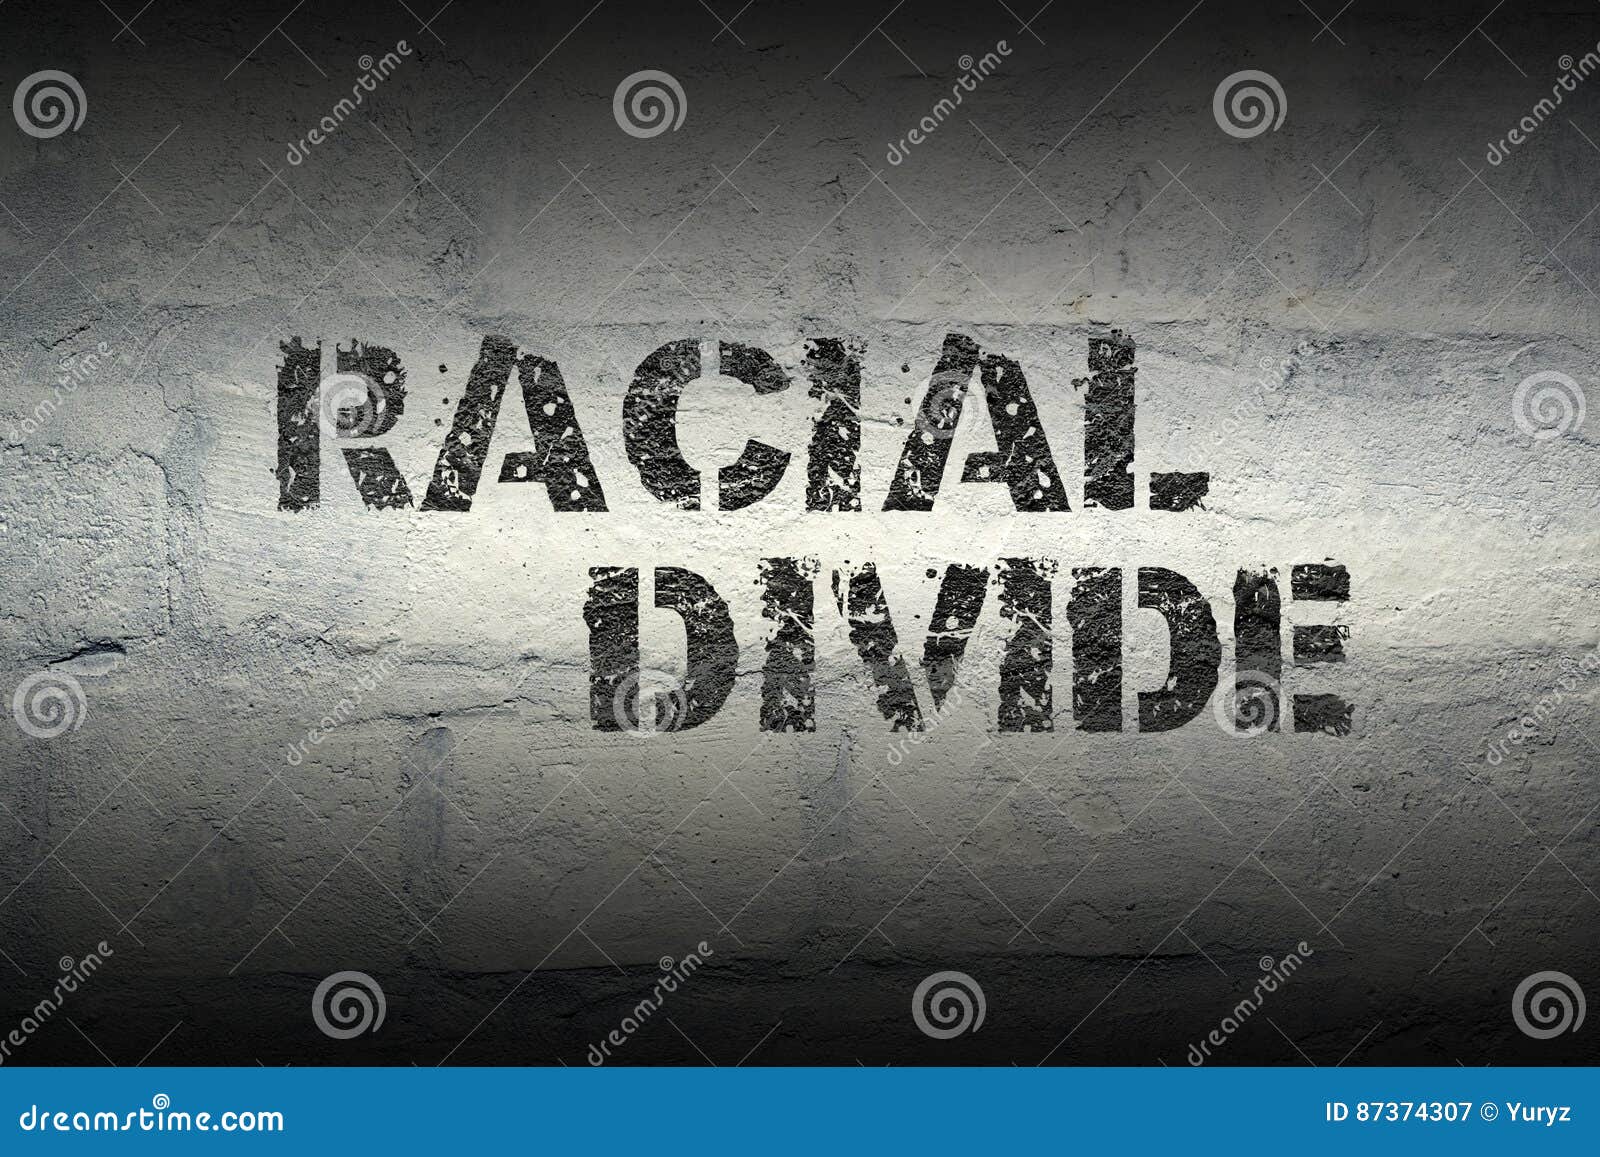 racial divide gr